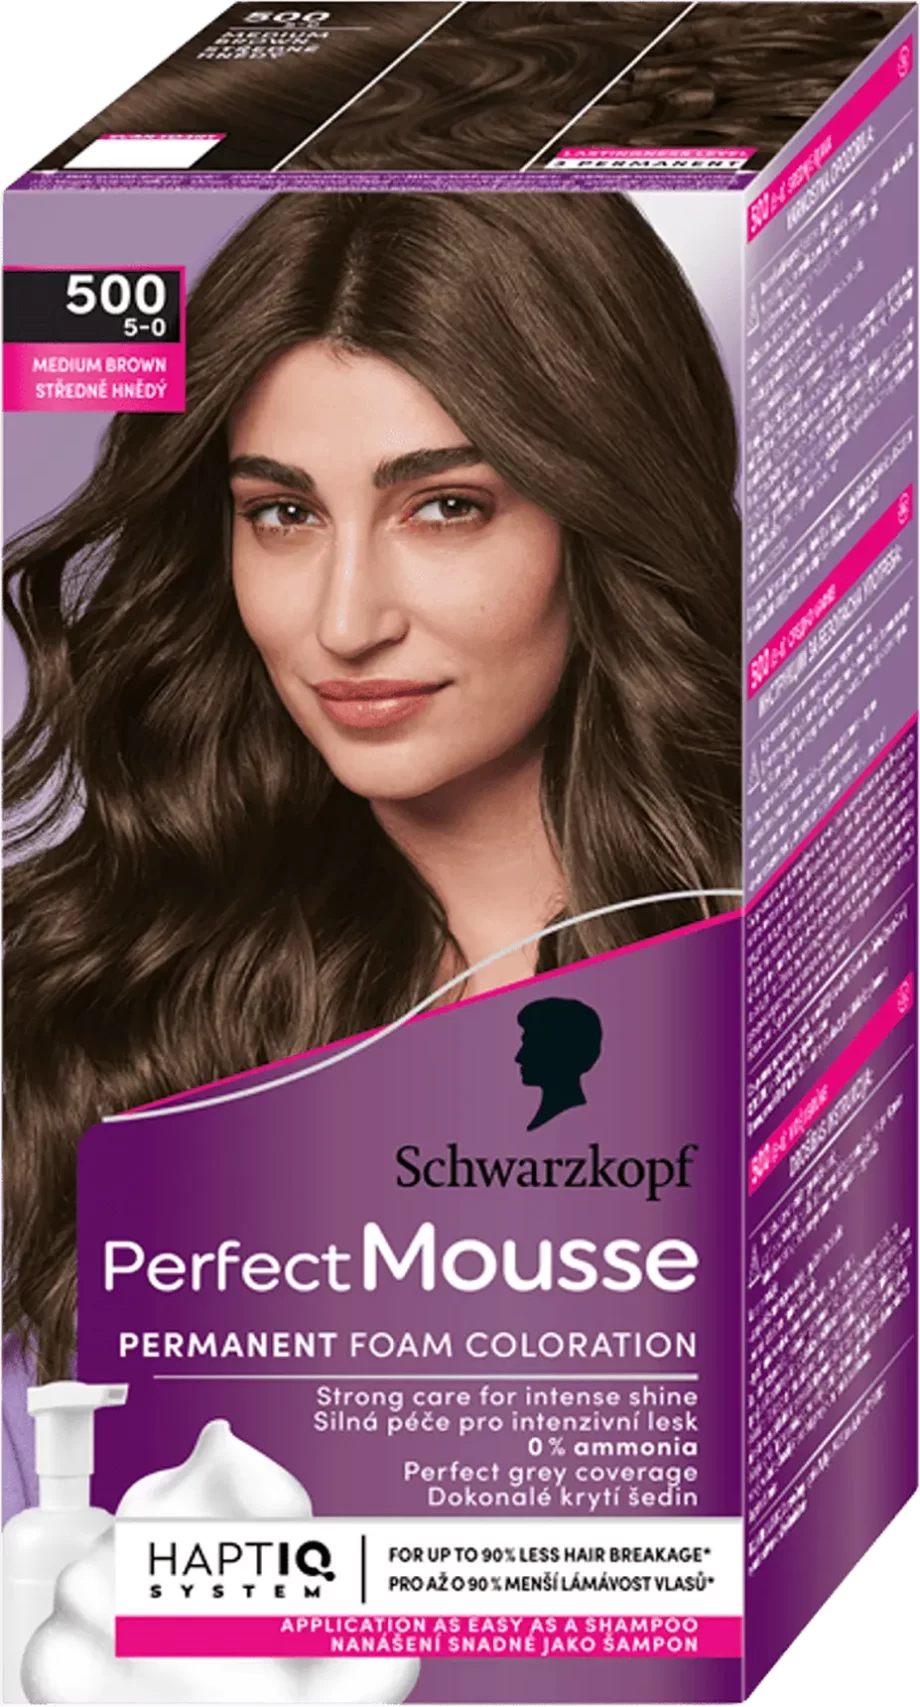 schwarzkopf perfect mousse 5-0 medium brown permanent hair color